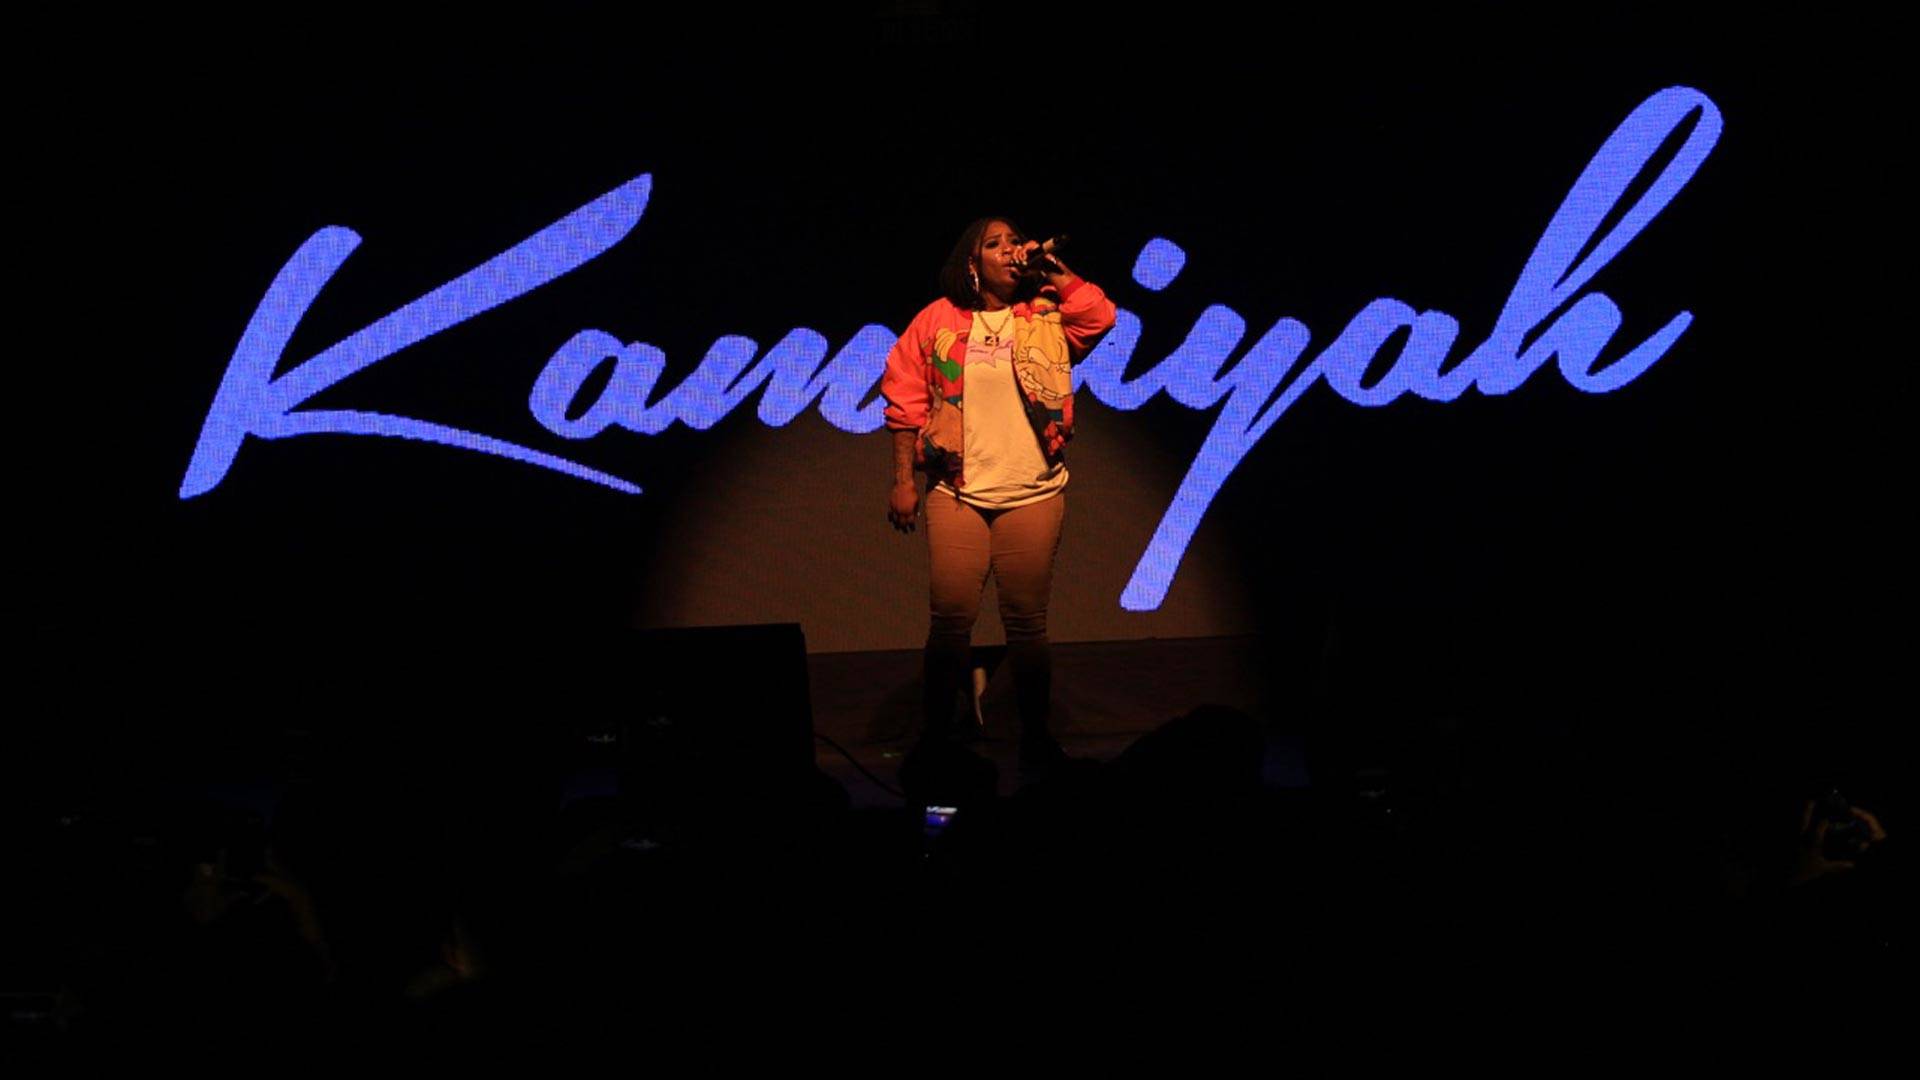 Kamaiyah performs at the Fox Theater in Oakland, Nov. 25, 2016.  Nailah Howze (<a href="http://www.cloudnaiii.com/">Cloudnaiii.com</a>)